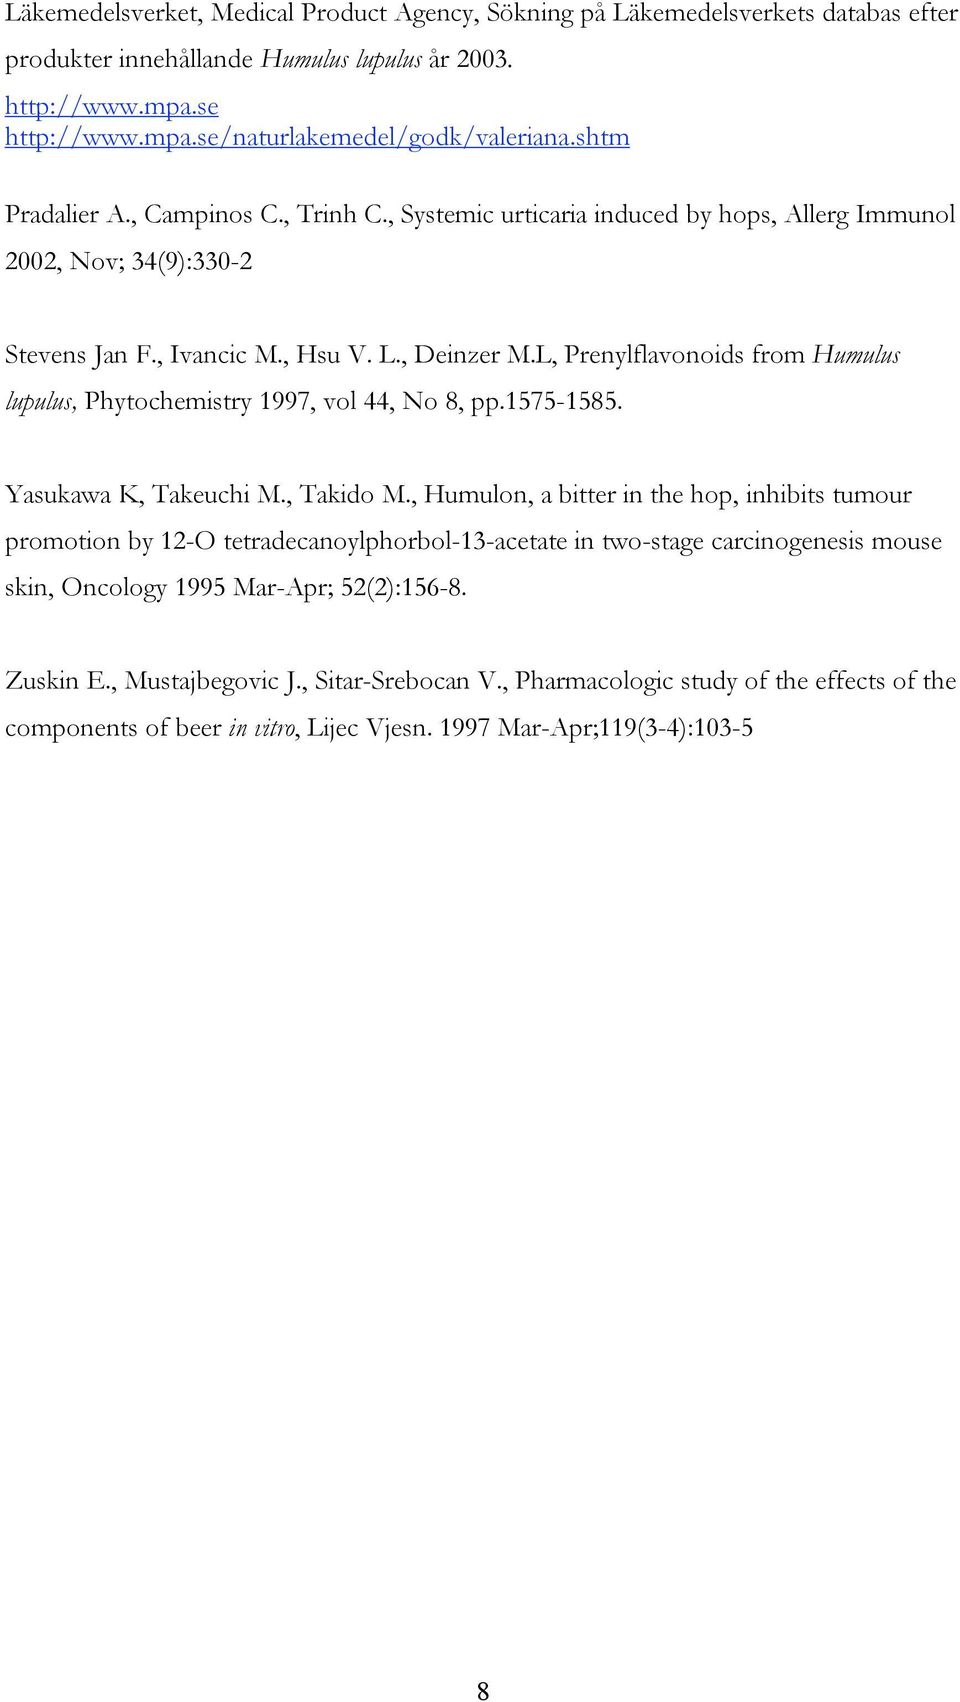 L, Prenylflavonoids from Humulus lupulus, Phytochemistry 1997, vol 44, No 8, pp.1575-1585. Yasukawa K, Takeuchi M., Takido M.